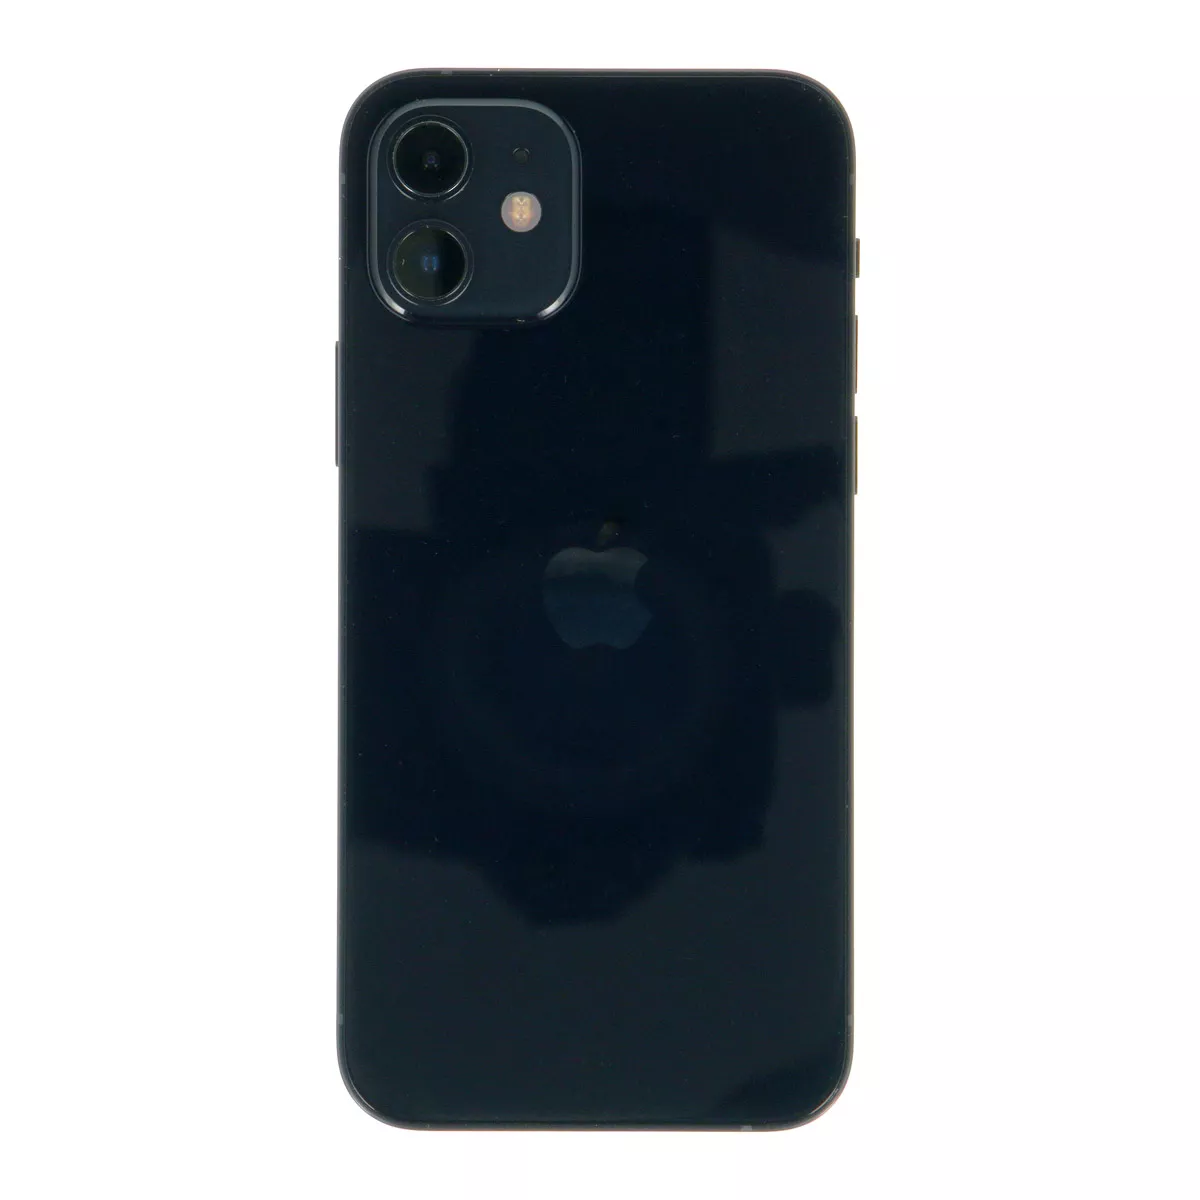 Apple iPhone 12 64 GB Black B